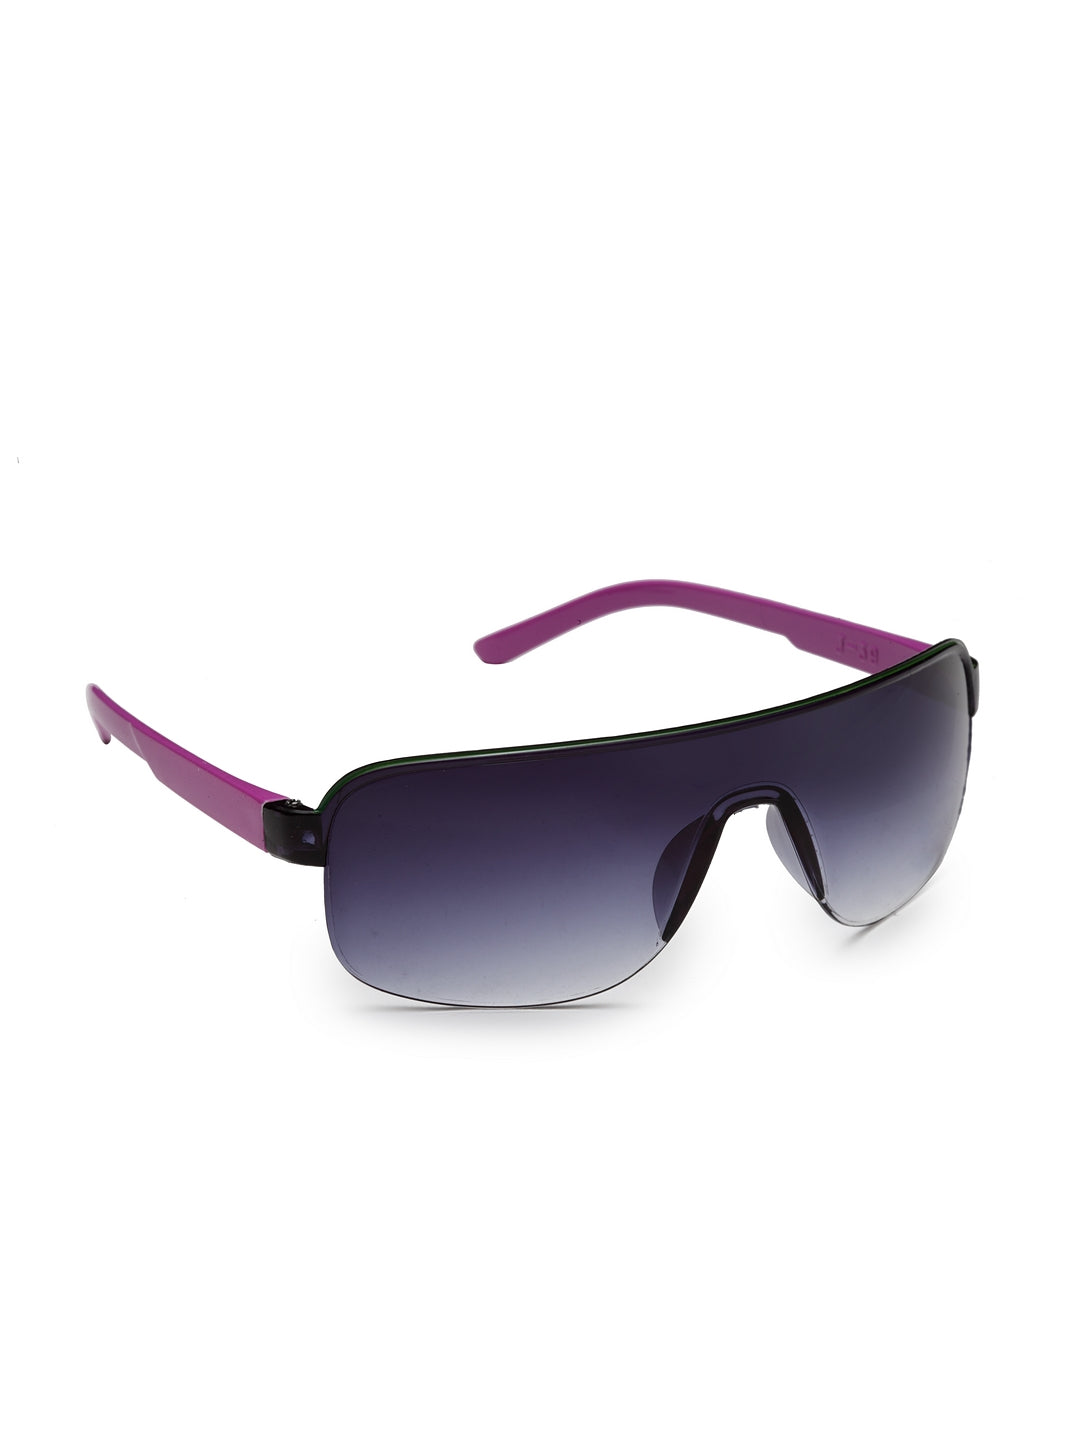 Stol'n Premium Attractive Fashionable UV-Protected Sports Shape Sunglasses - Purple